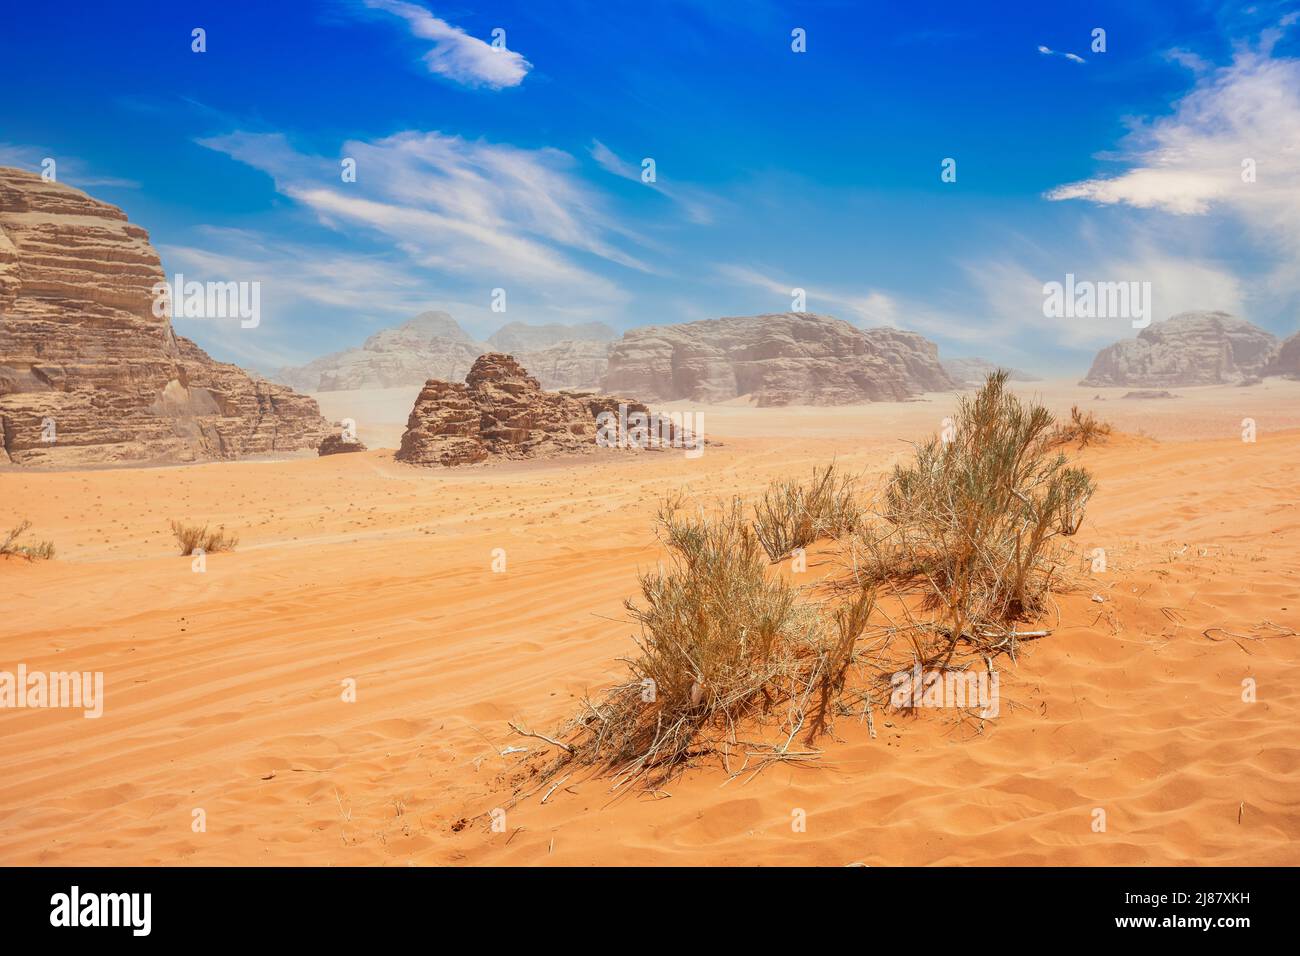 Orange sands, mountains and landscape of Wadi Rum desert, Jordan Stock Photo